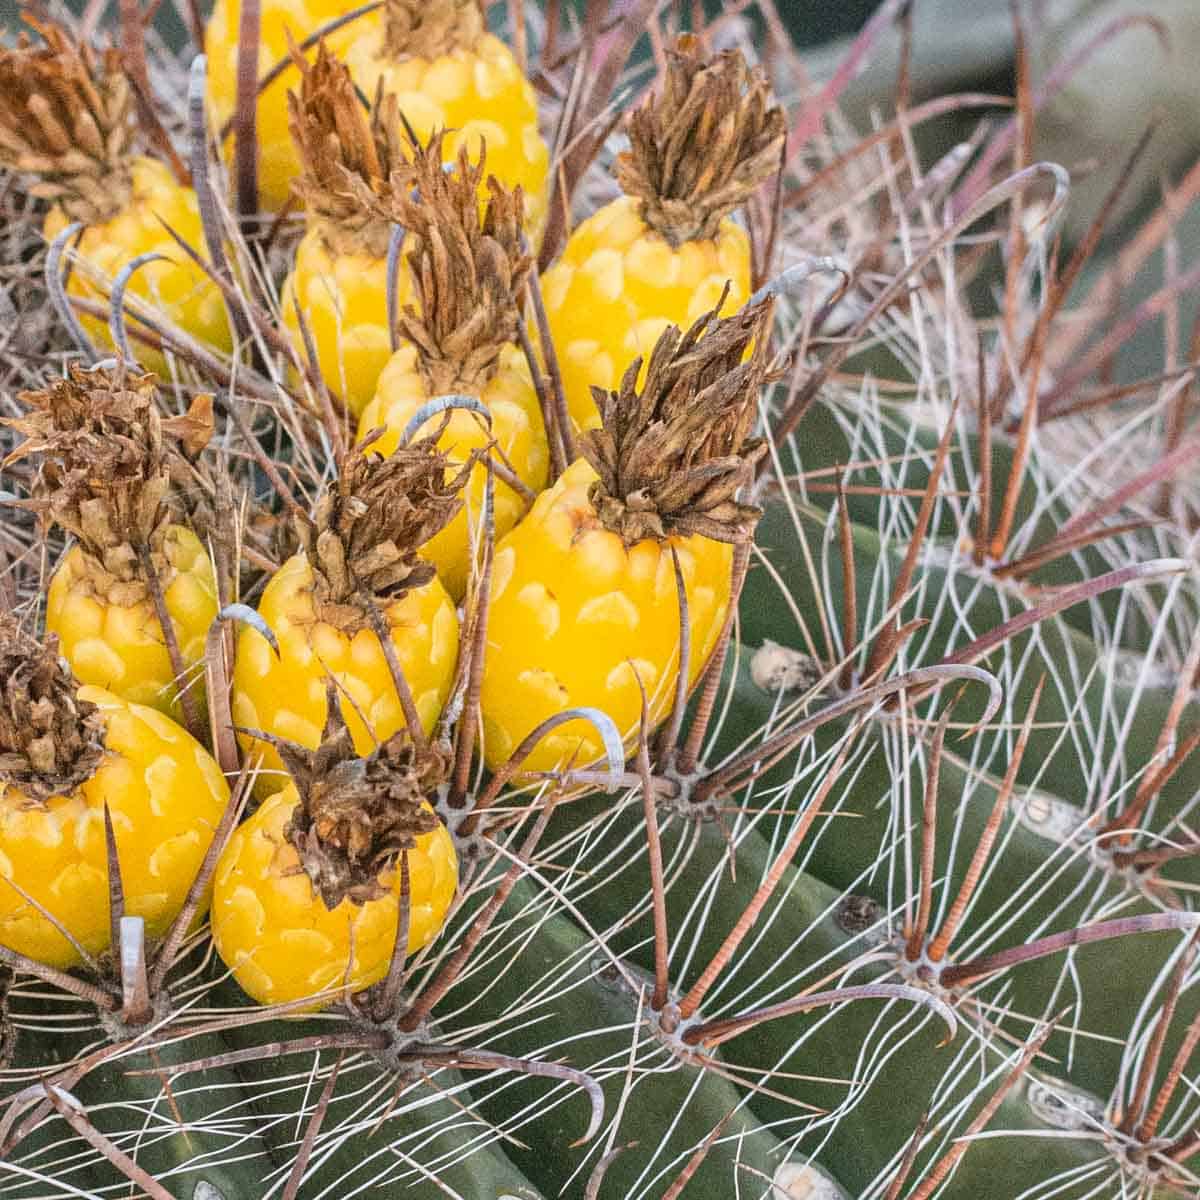 edible barrel cactus buds in the desert. 